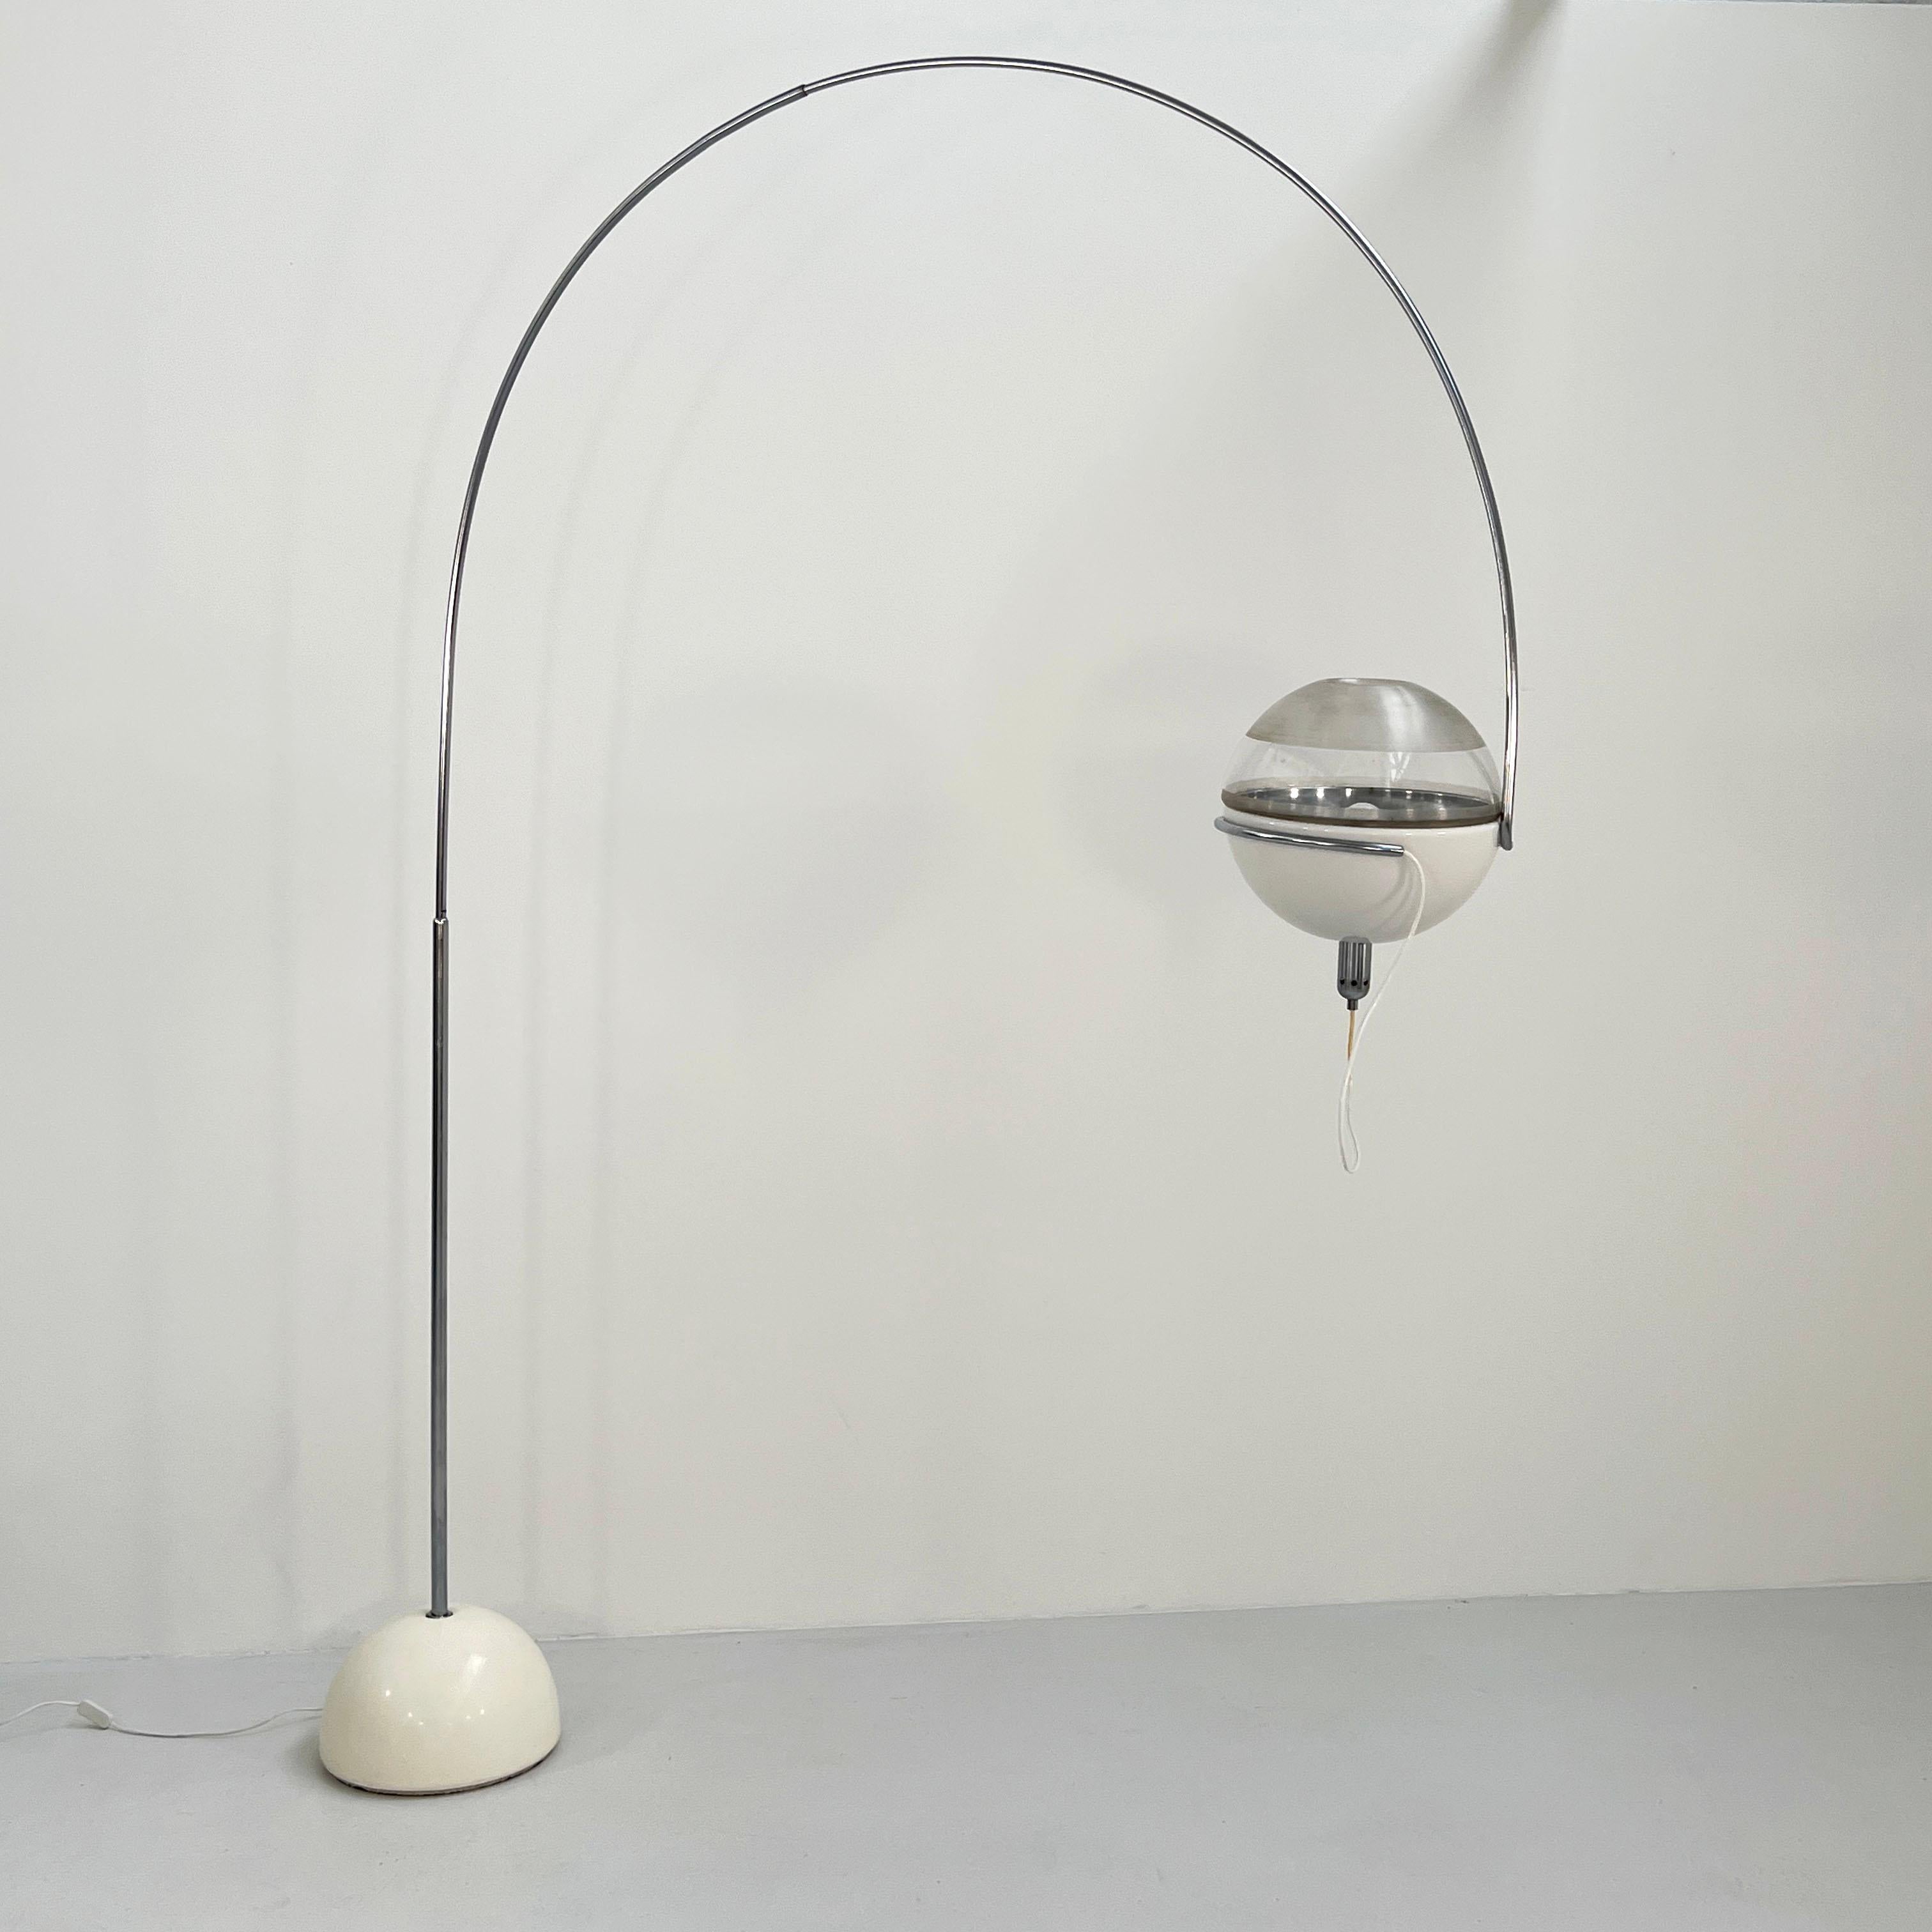 Italian Focus Arc Floor Lamp by Fabio Lenci for Guzzini, 1970s